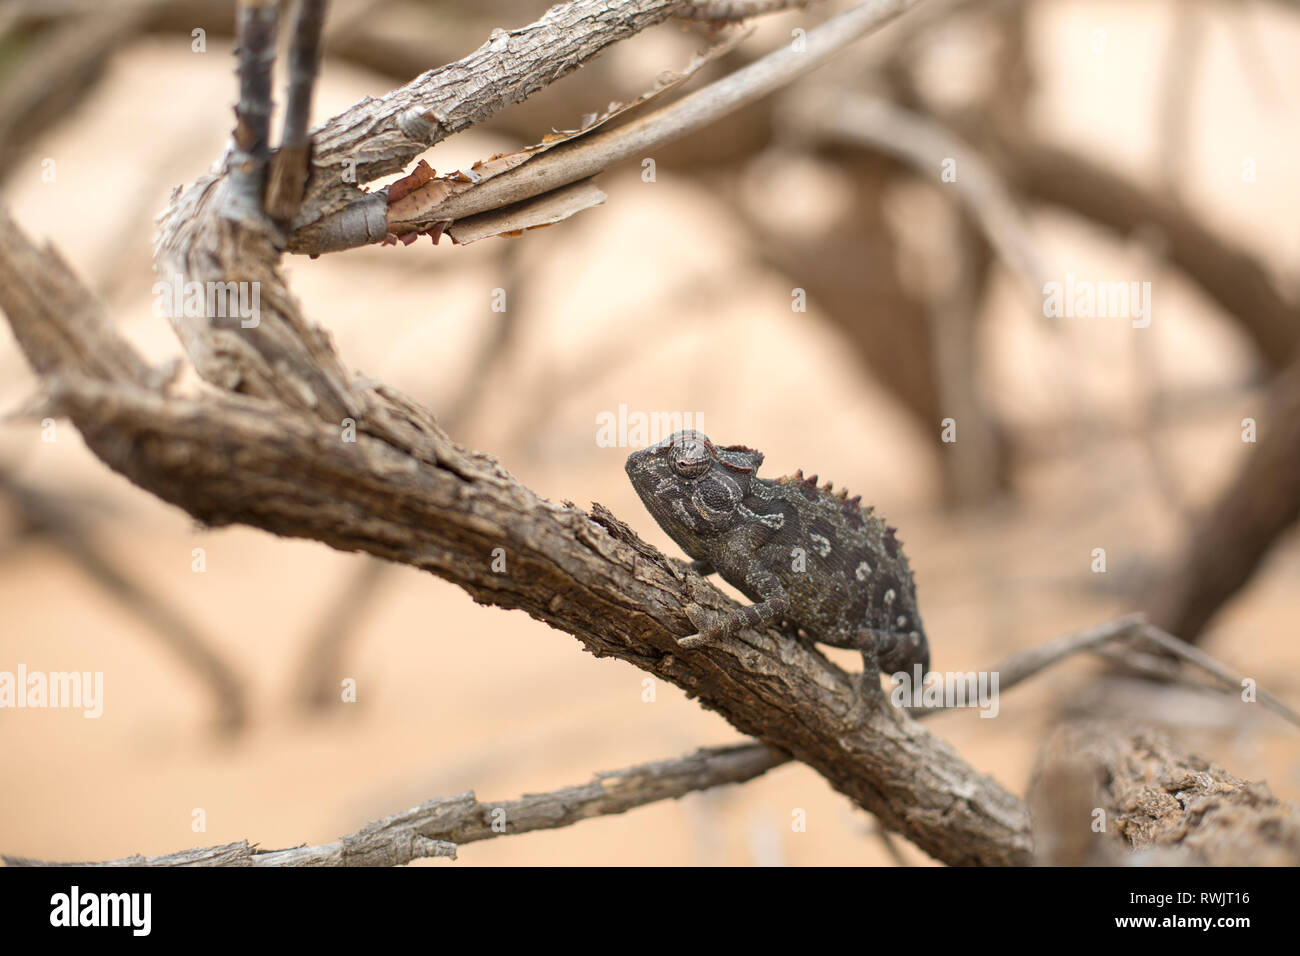 A Namaqua Chameleon in the Dorob National Park, Namibia. Stock Photo